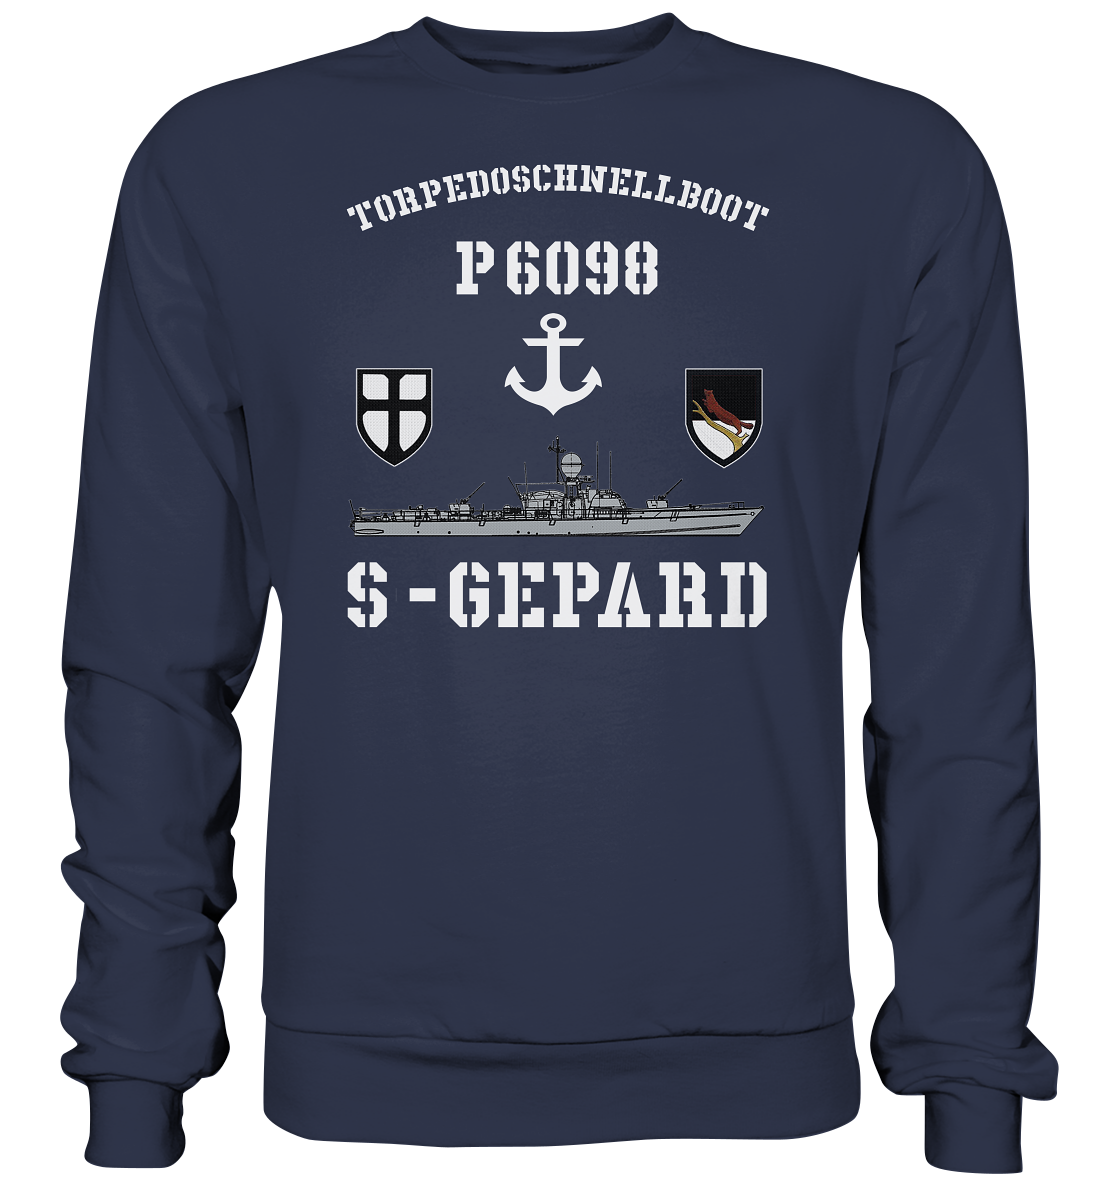 Torpedoschnellboot P6098 S-GEPARD Anker - Premium Sweatshirt